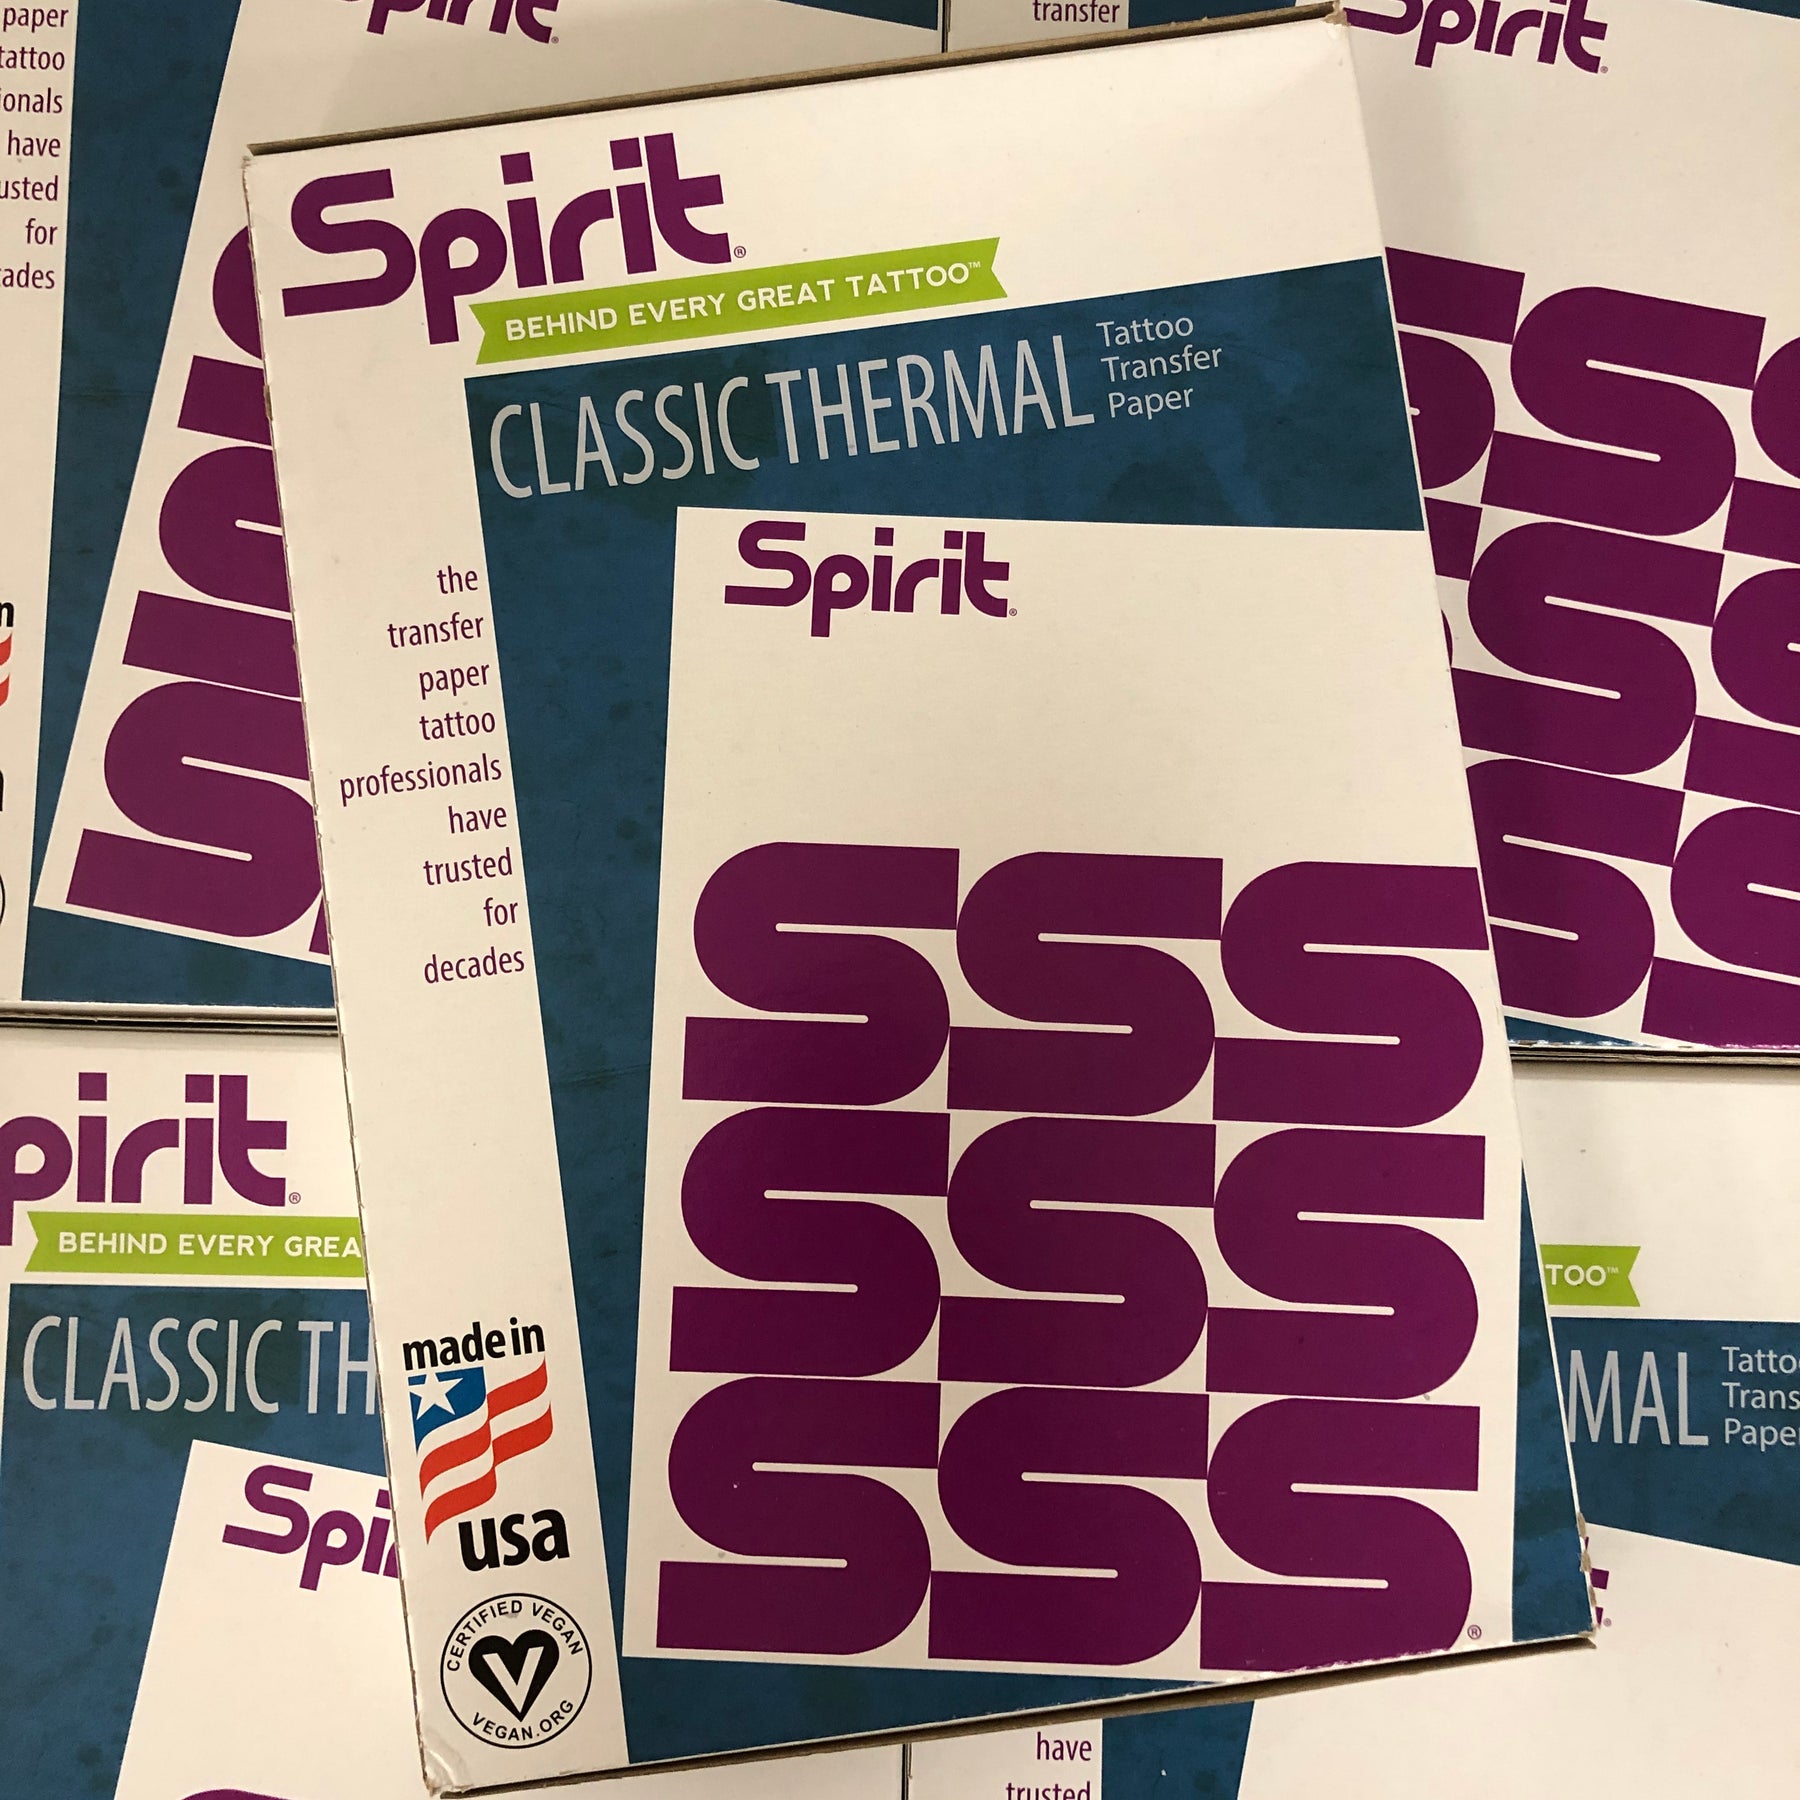 Spirit 8.5 x 11 ReproFX Thermal Transfer Paper